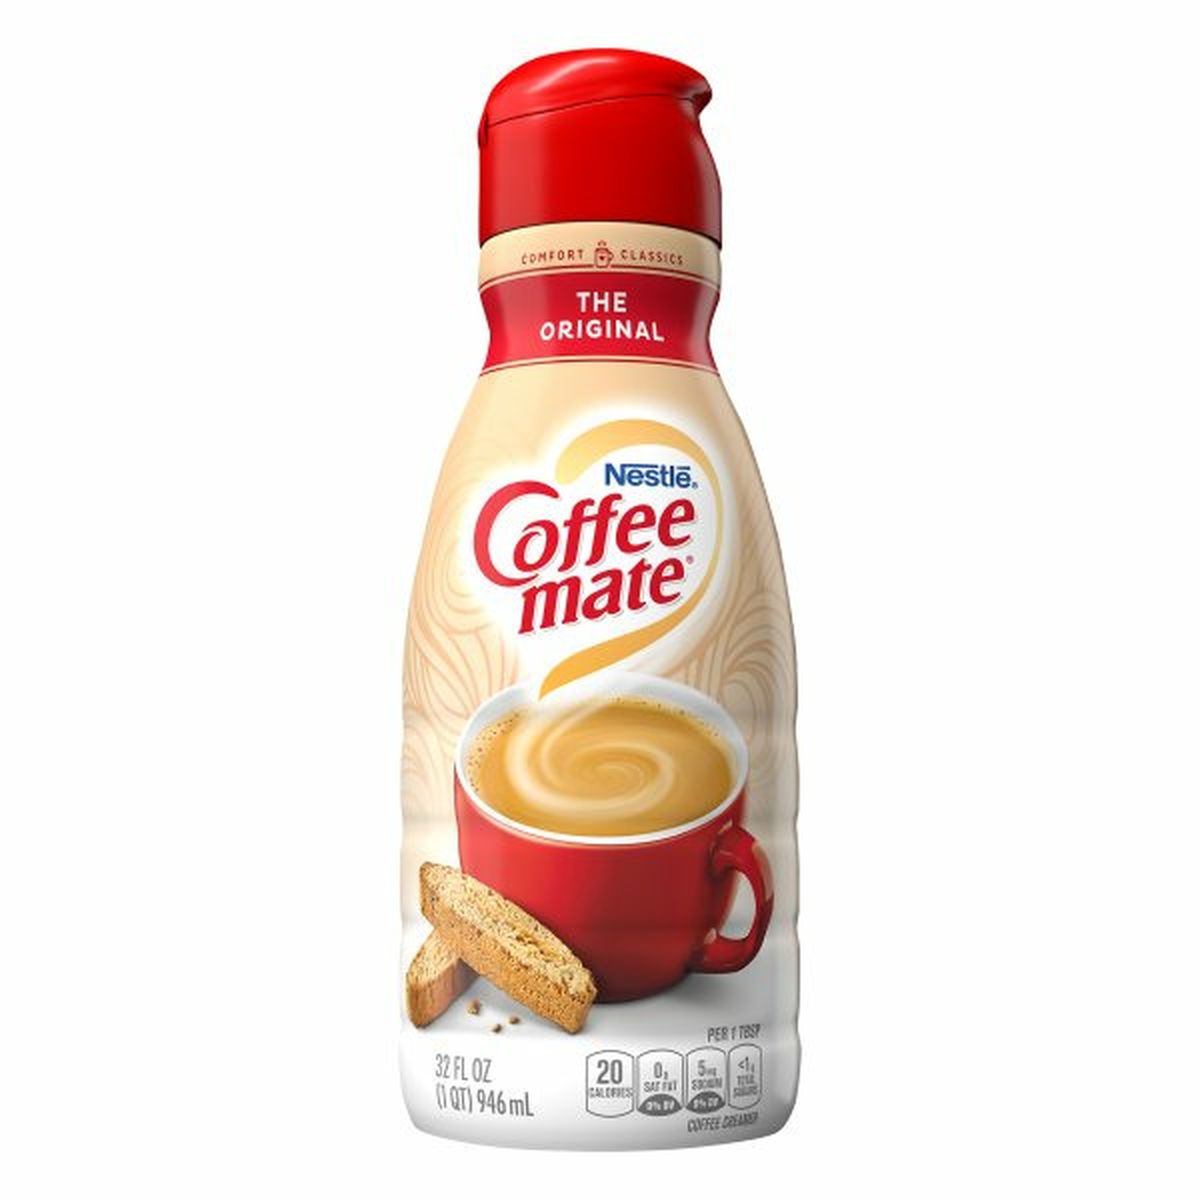 Calories in Coffee mate Coffee Creamer, The Original